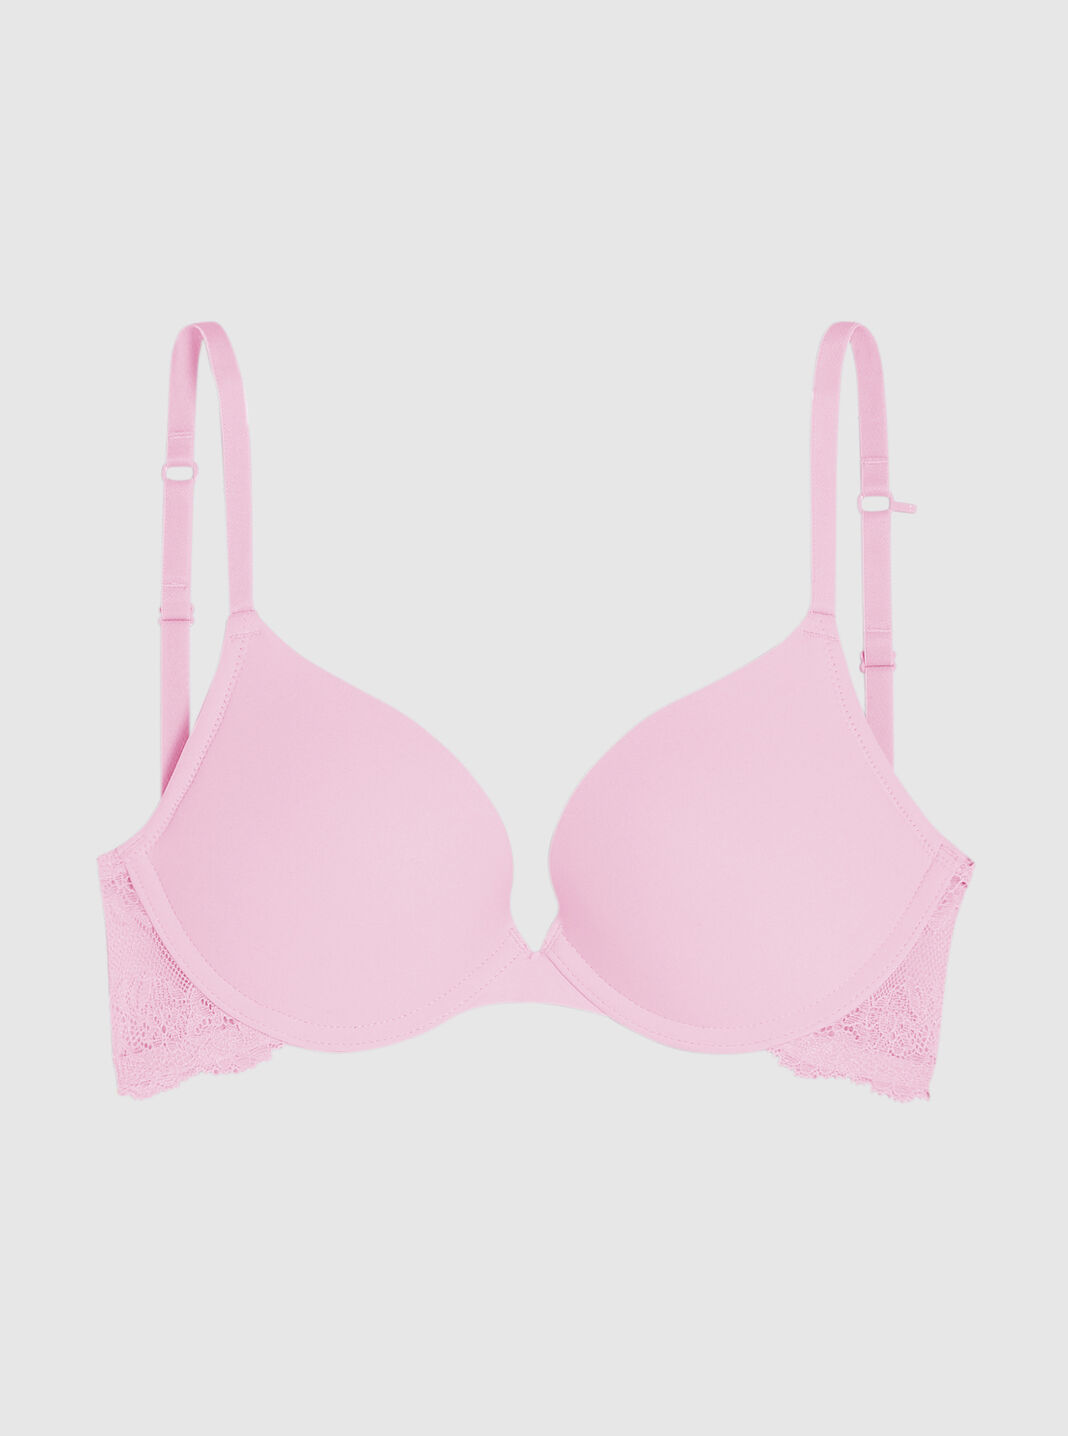 New Push up Bra Pink color Sexy Lingerie Bralette Bras For Women Underwear  Strapless Padded Brassiere